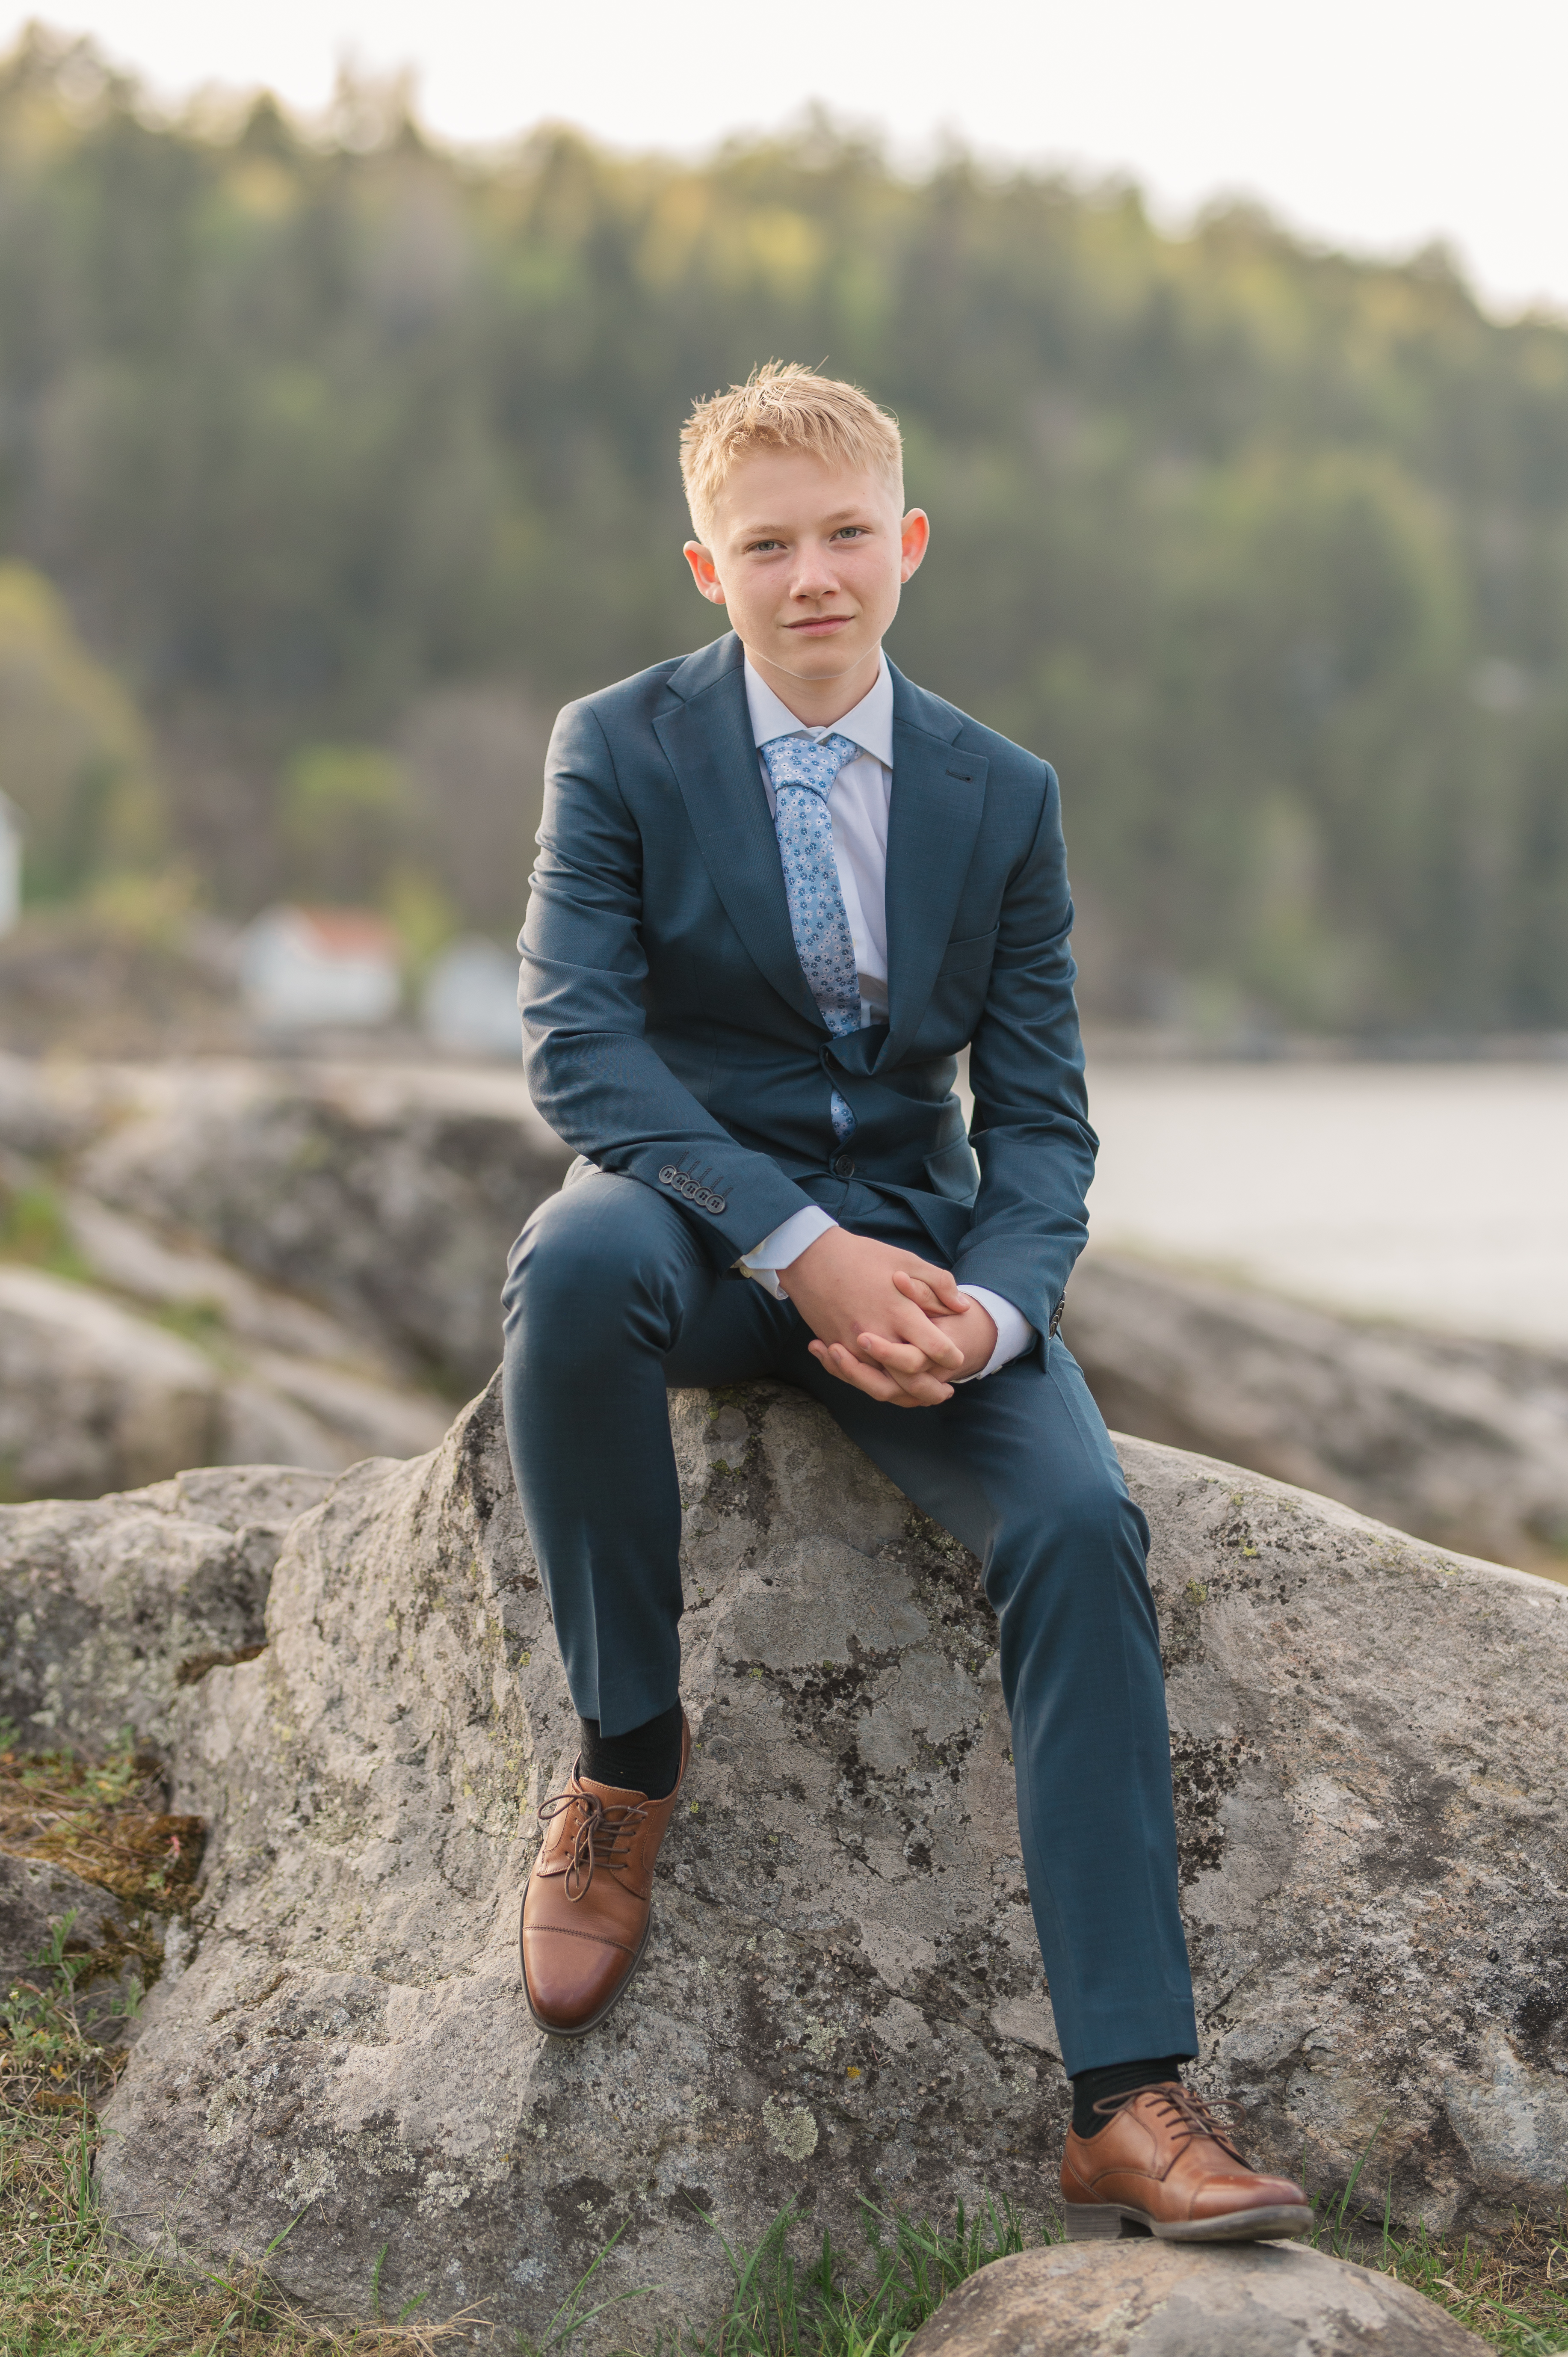 Konfirmantfotografering - Gutt i blå dress som sitter på en sten